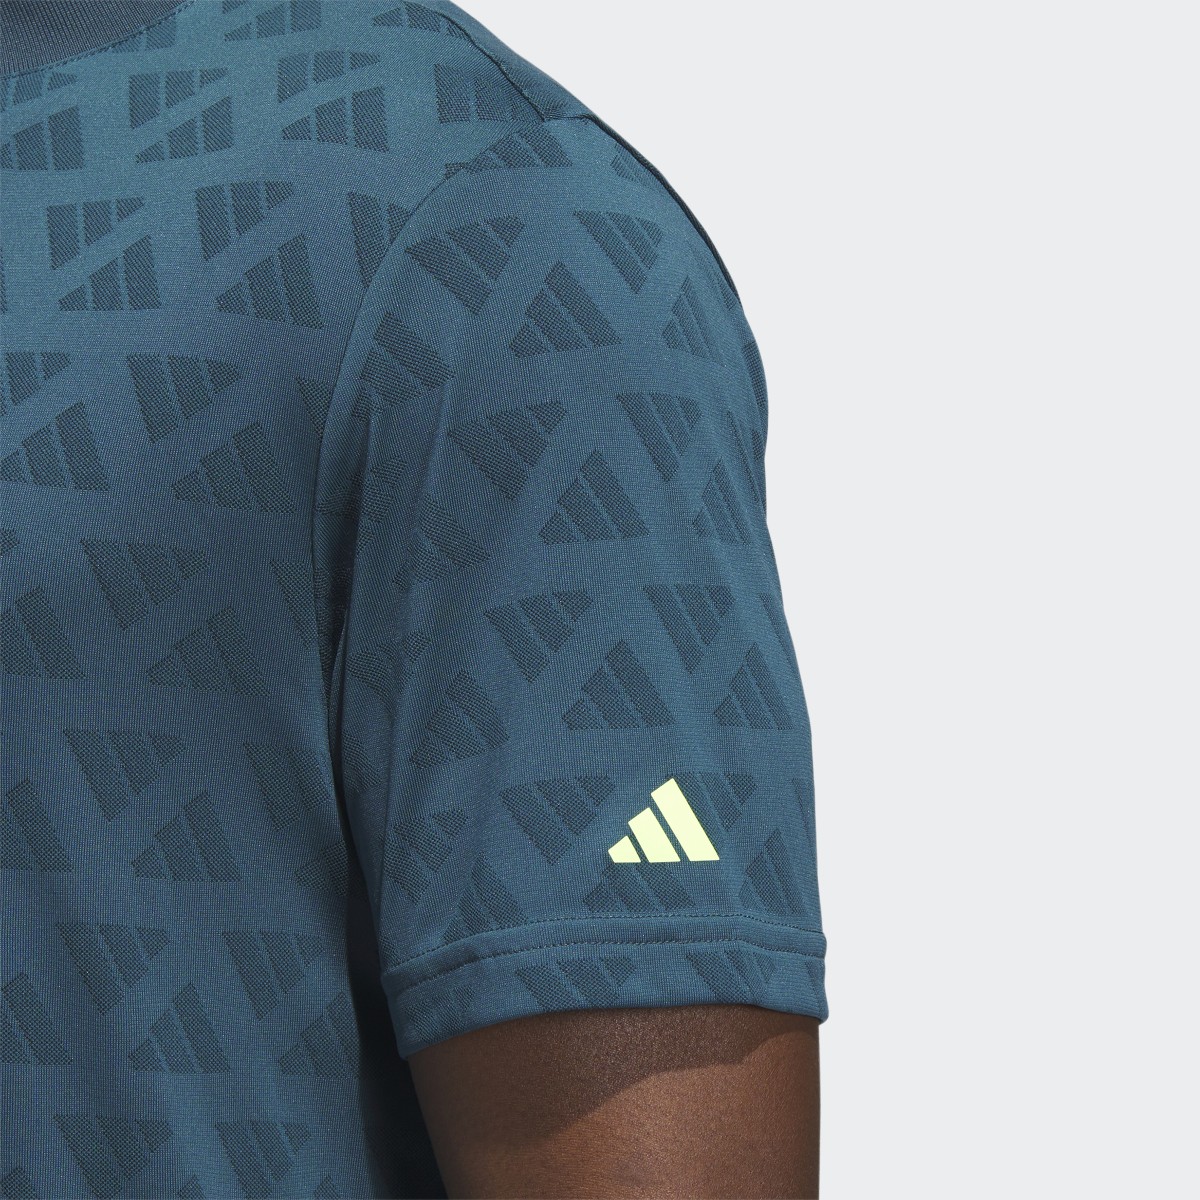 Adidas Adi Jacquard Mock Polo Shirt. 6